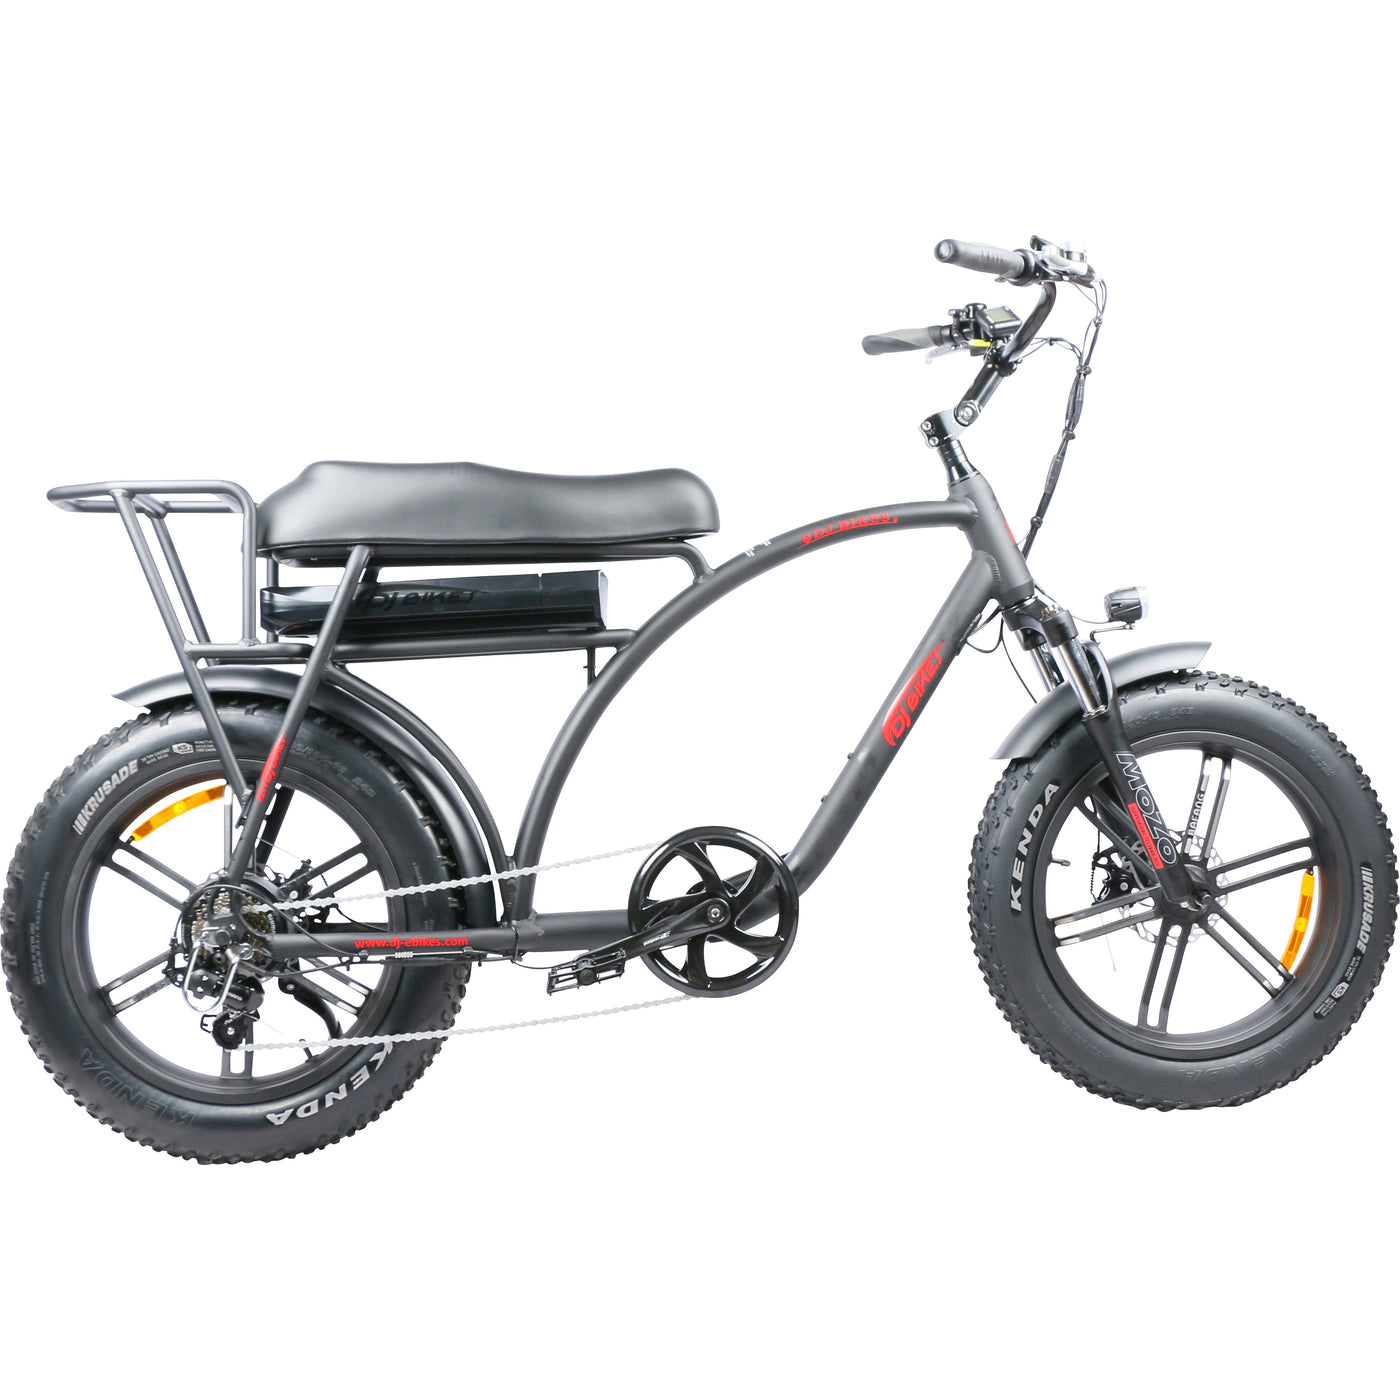 Electric Mini Bike, DJ Super Bike, retro mini bike style fat tire ebike